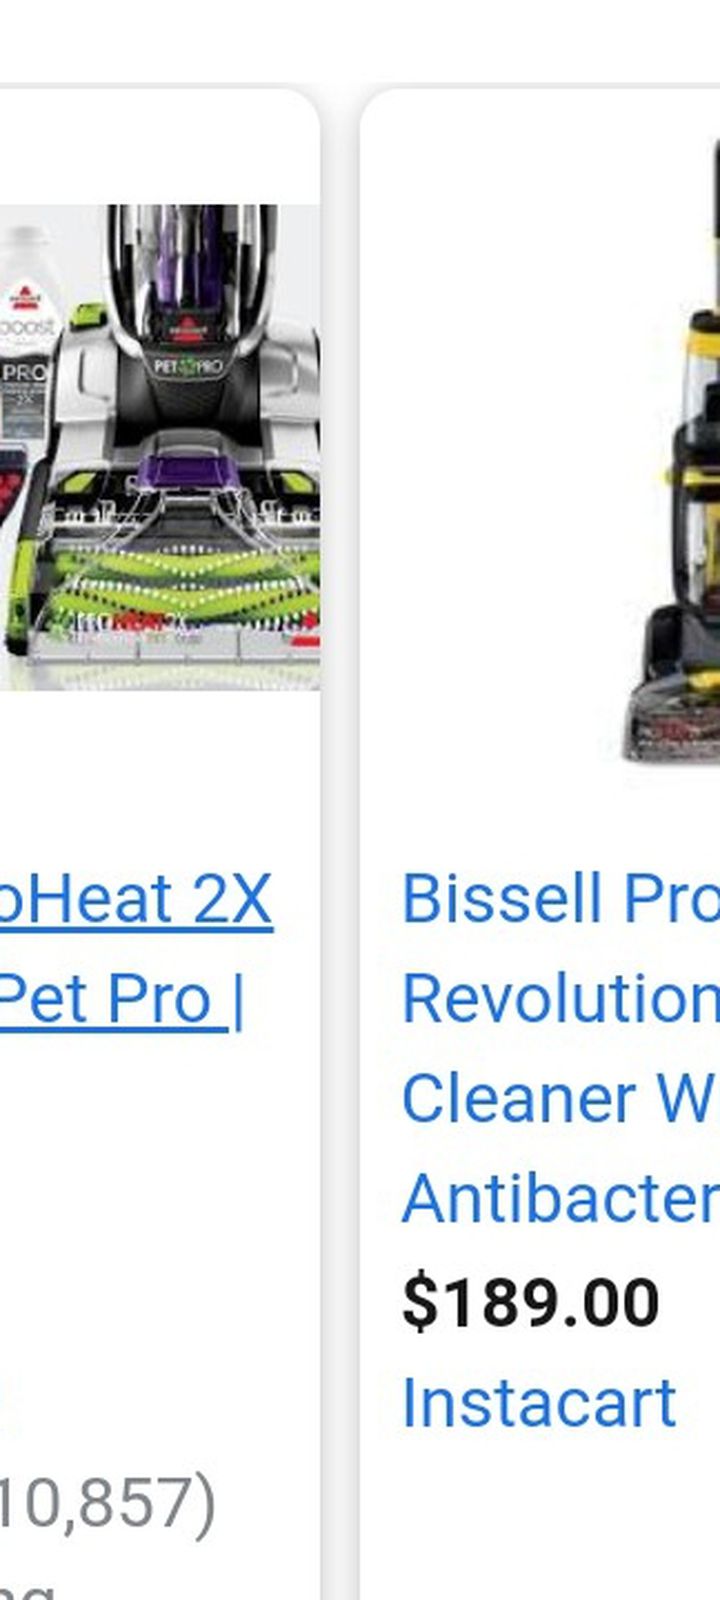 Bissell Pro Heat 2x Revolution Carpet Pro Cleaner